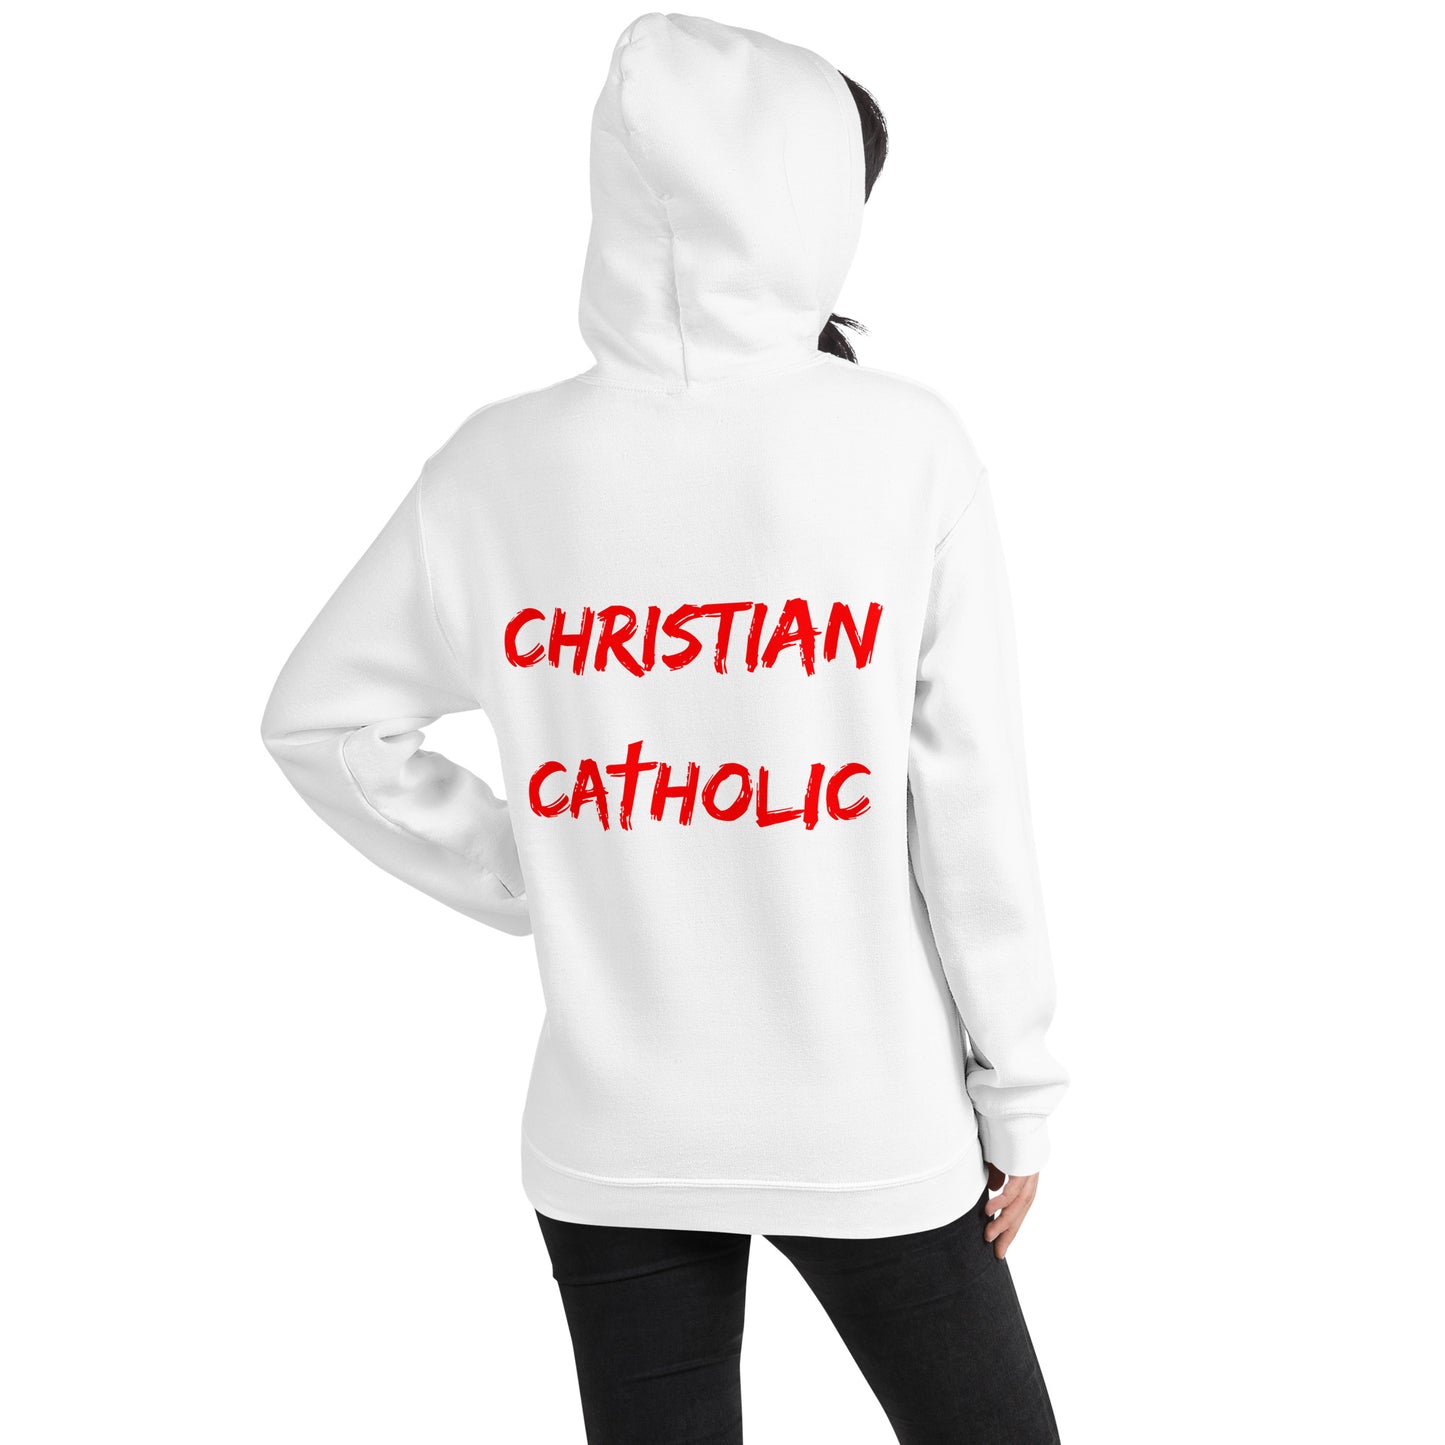 Christian is my Name, Catholic my Surname Women's Hoodie